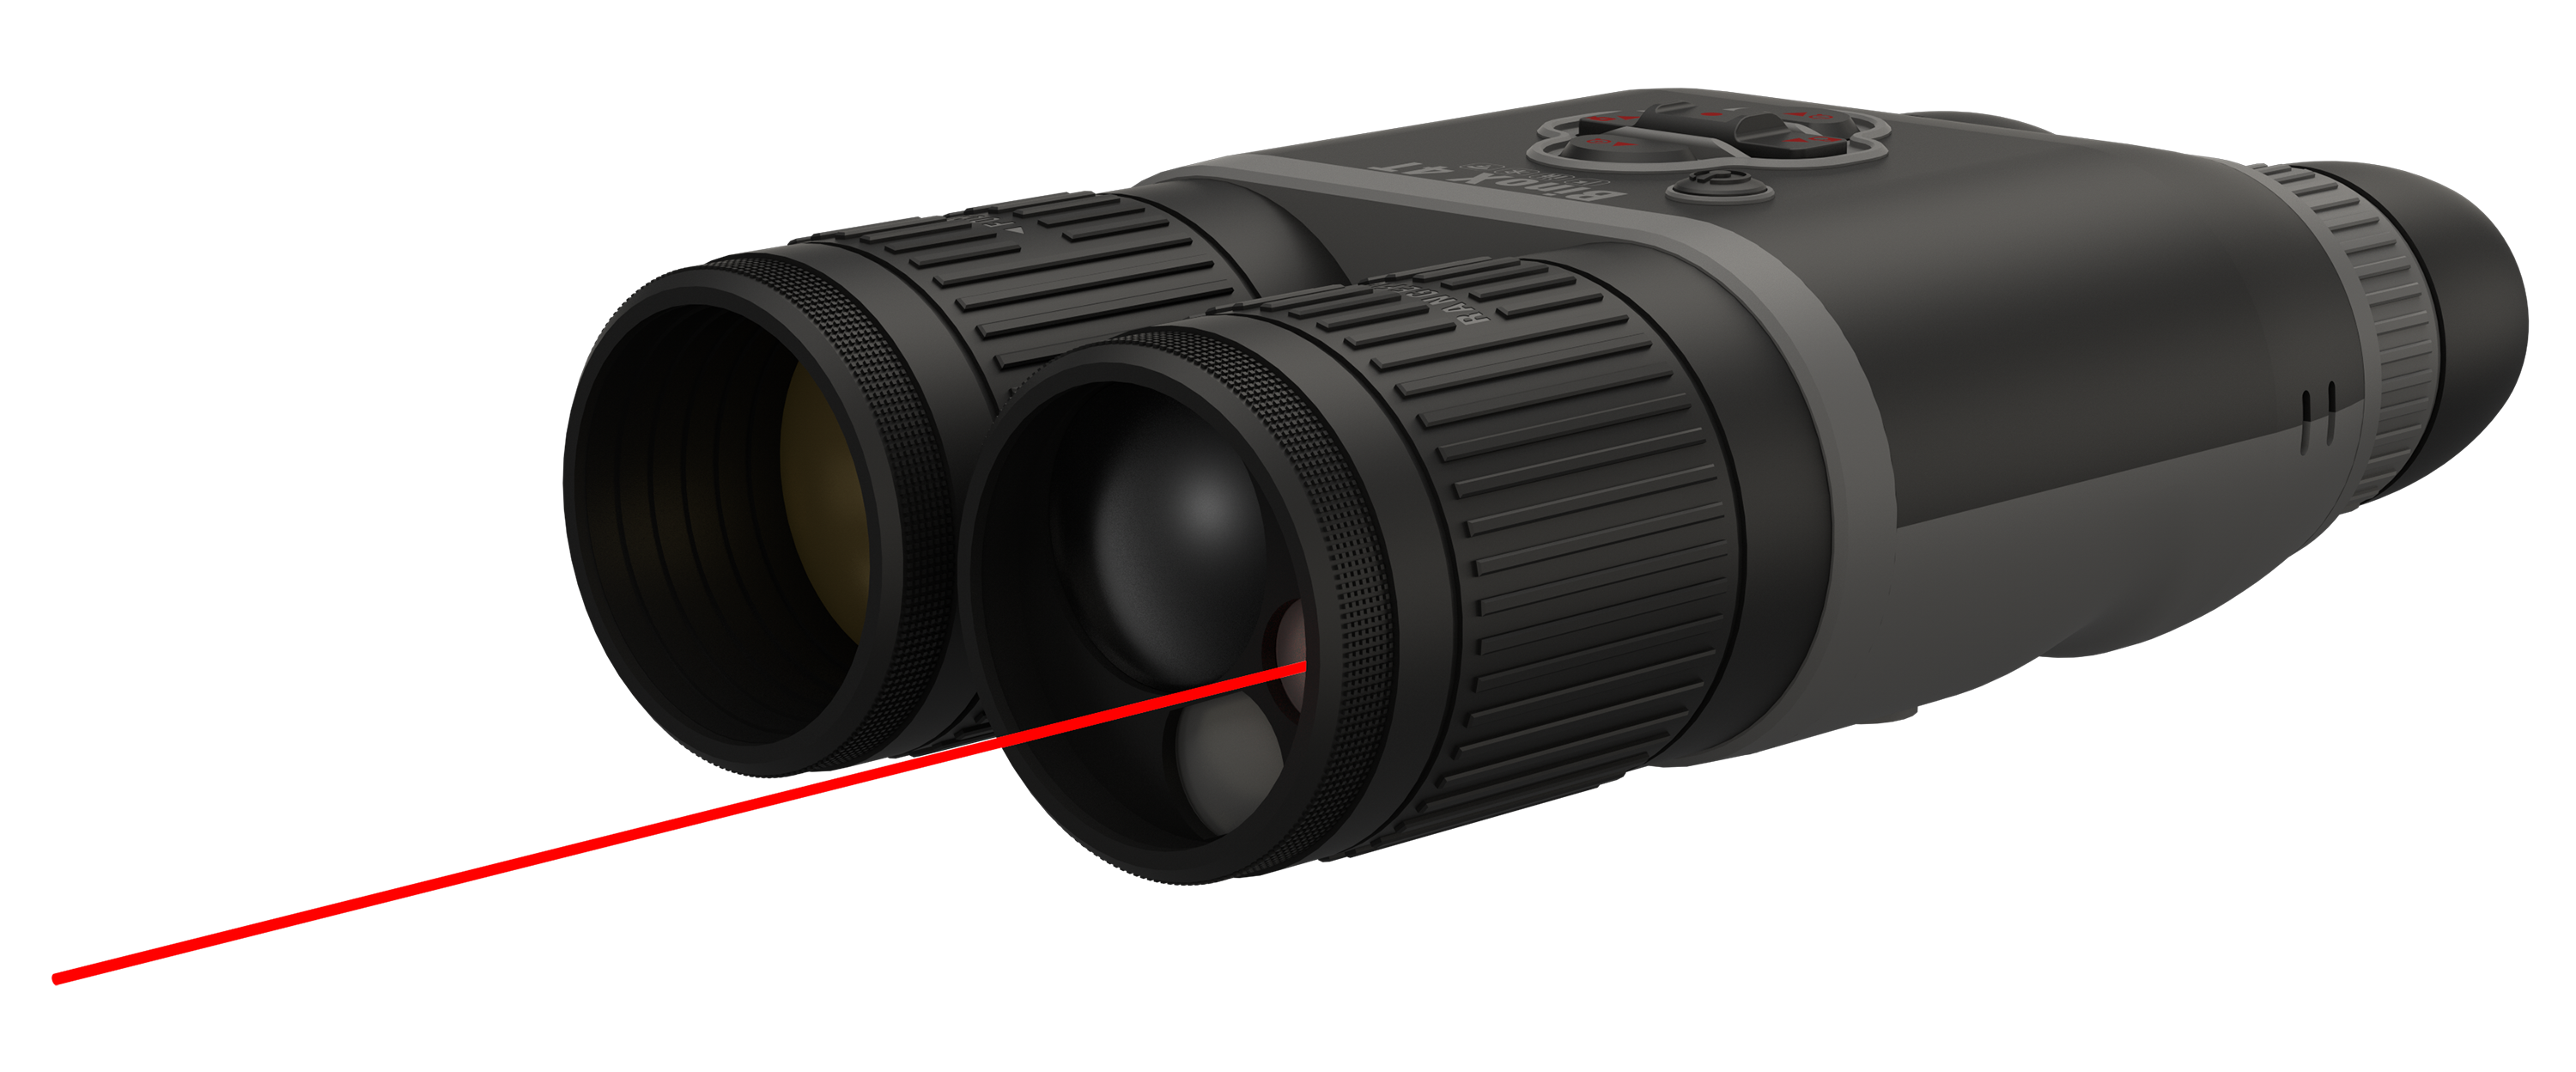 ATN BinoX 4T 384 Smart HD Thermal Binoculars with Laser Rangefinder